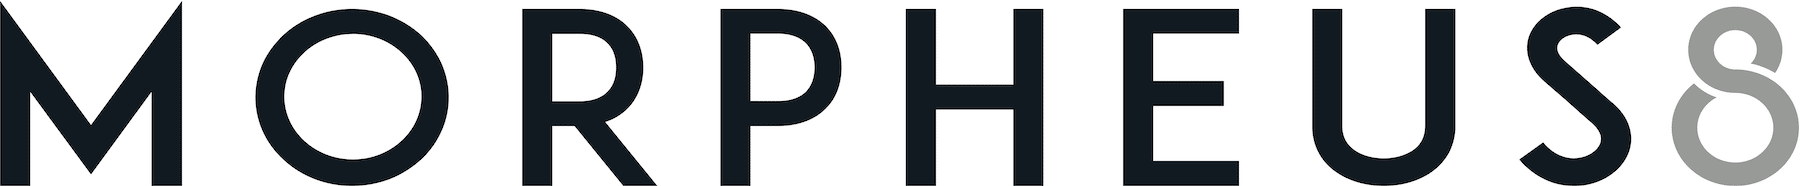 morpheus8-logo-1